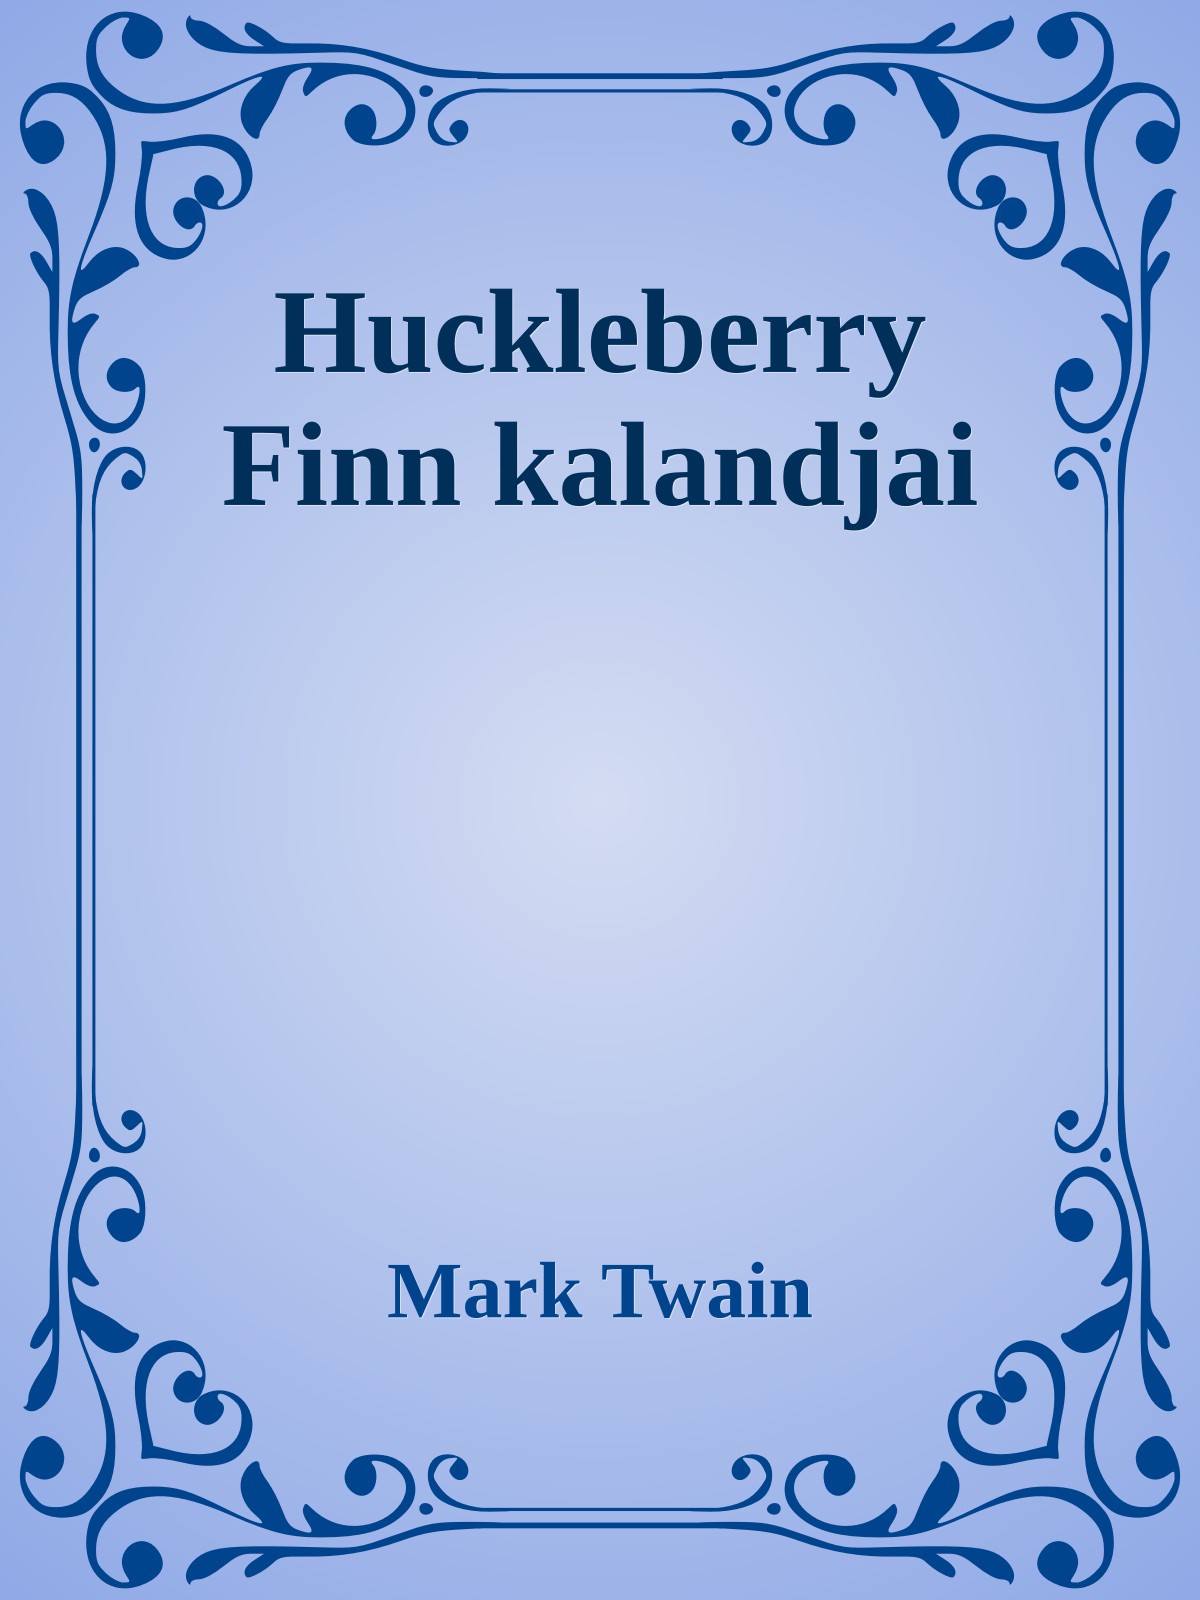 Huckleberry finn kalandjai